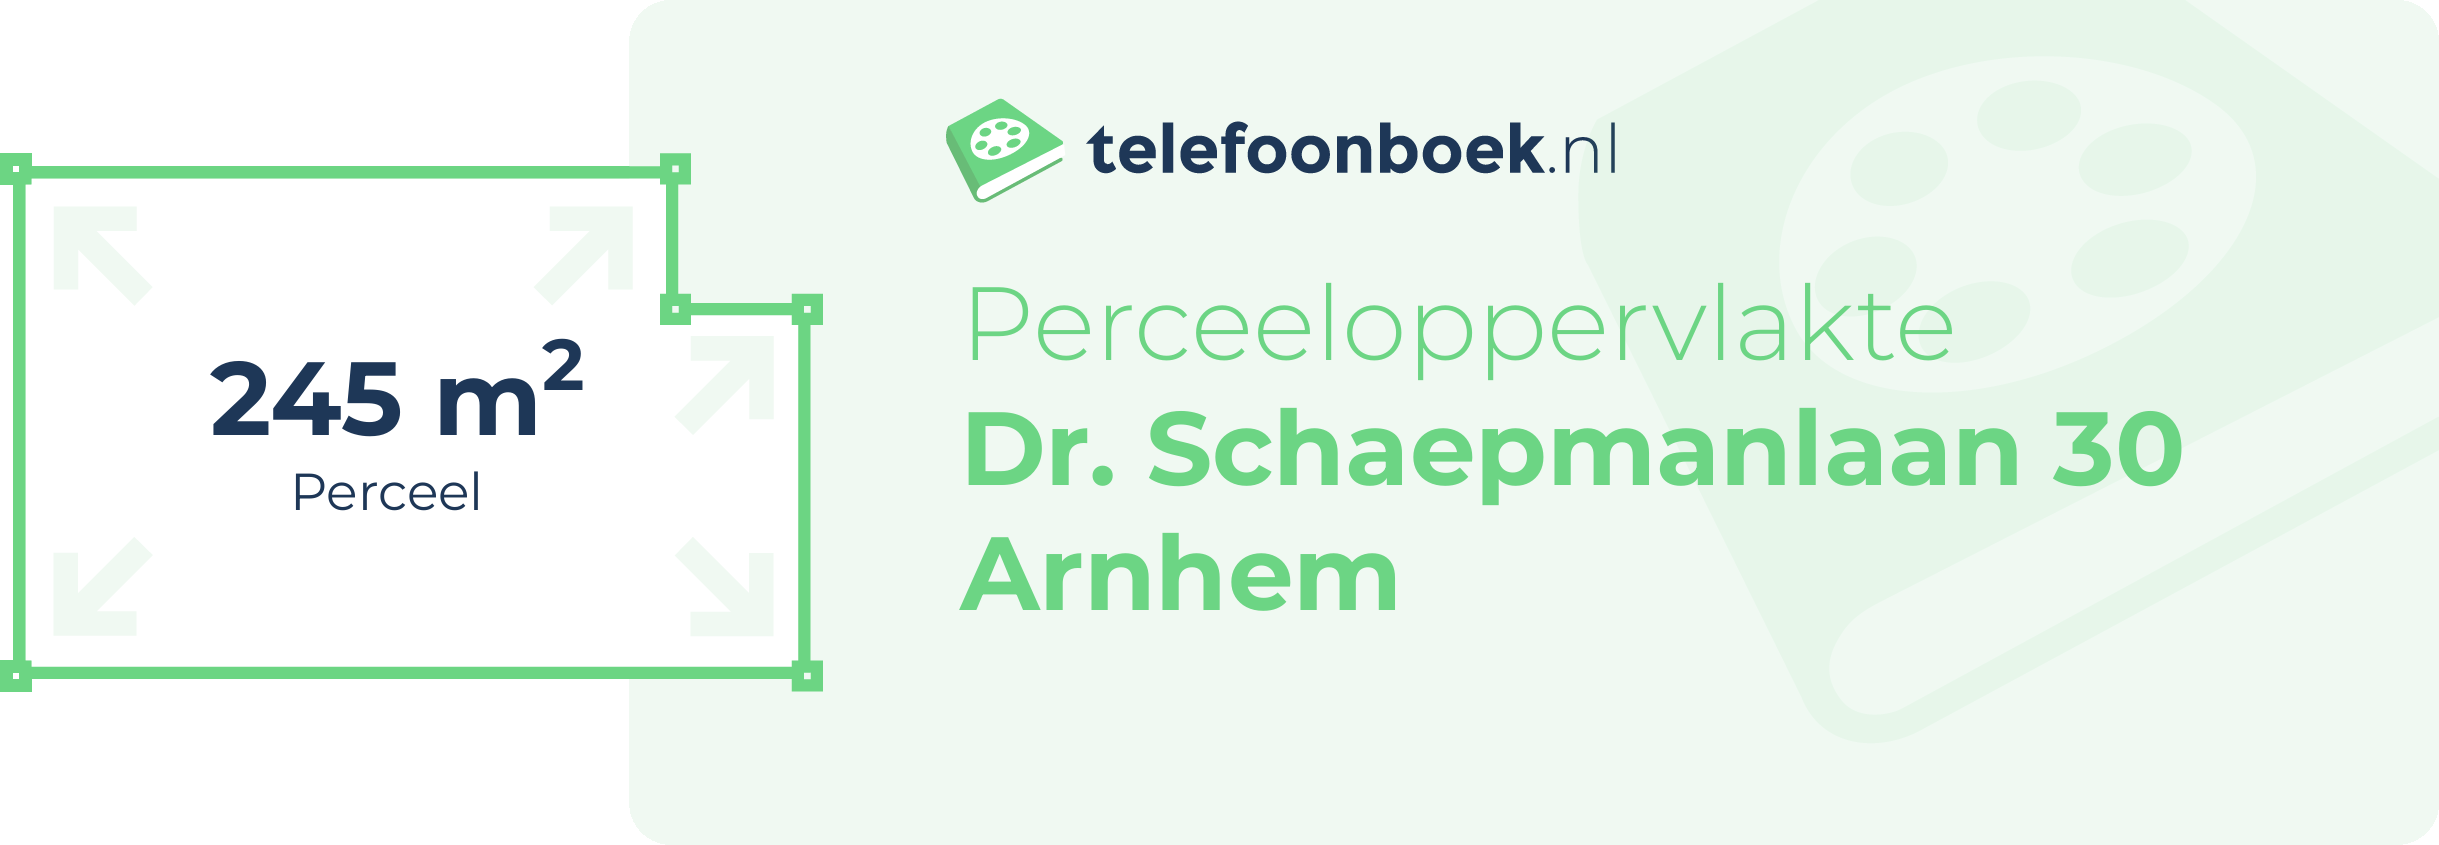 Perceeloppervlakte Dr. Schaepmanlaan 30 Arnhem